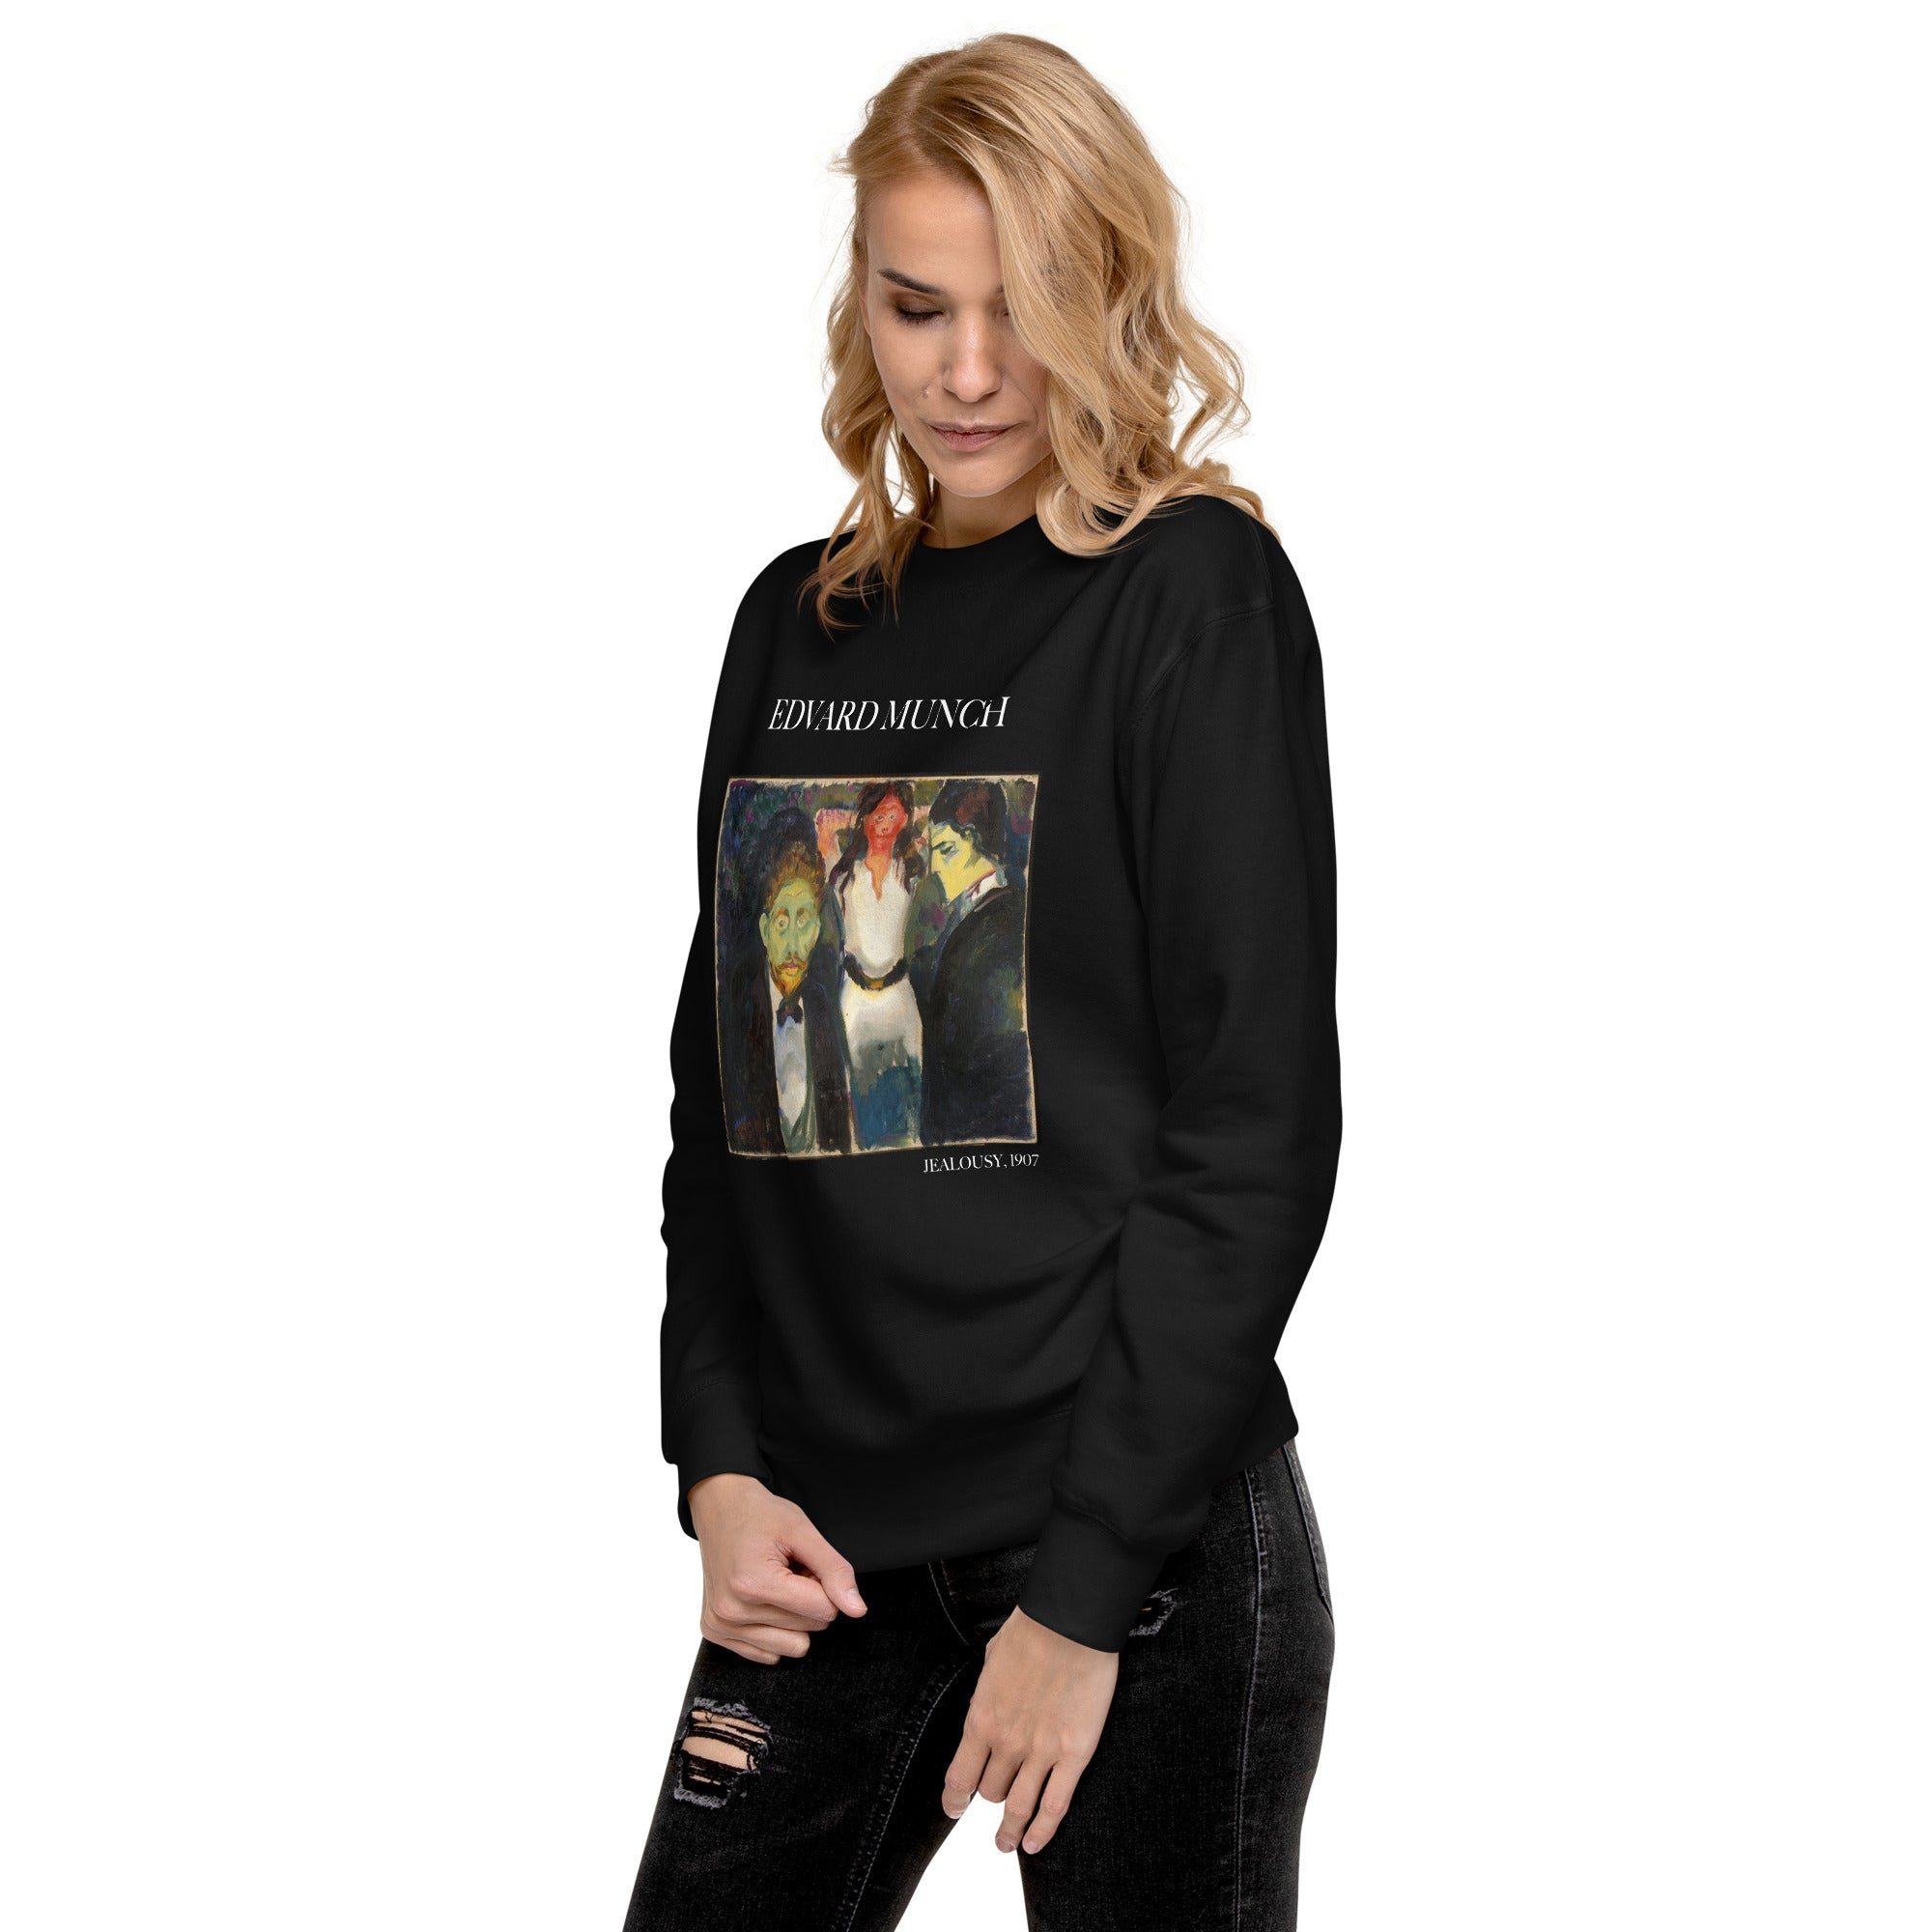 Edvard Munch 'Jealousy' Famous Painting Sweatshirt | Unisex Premium Sweatshirt